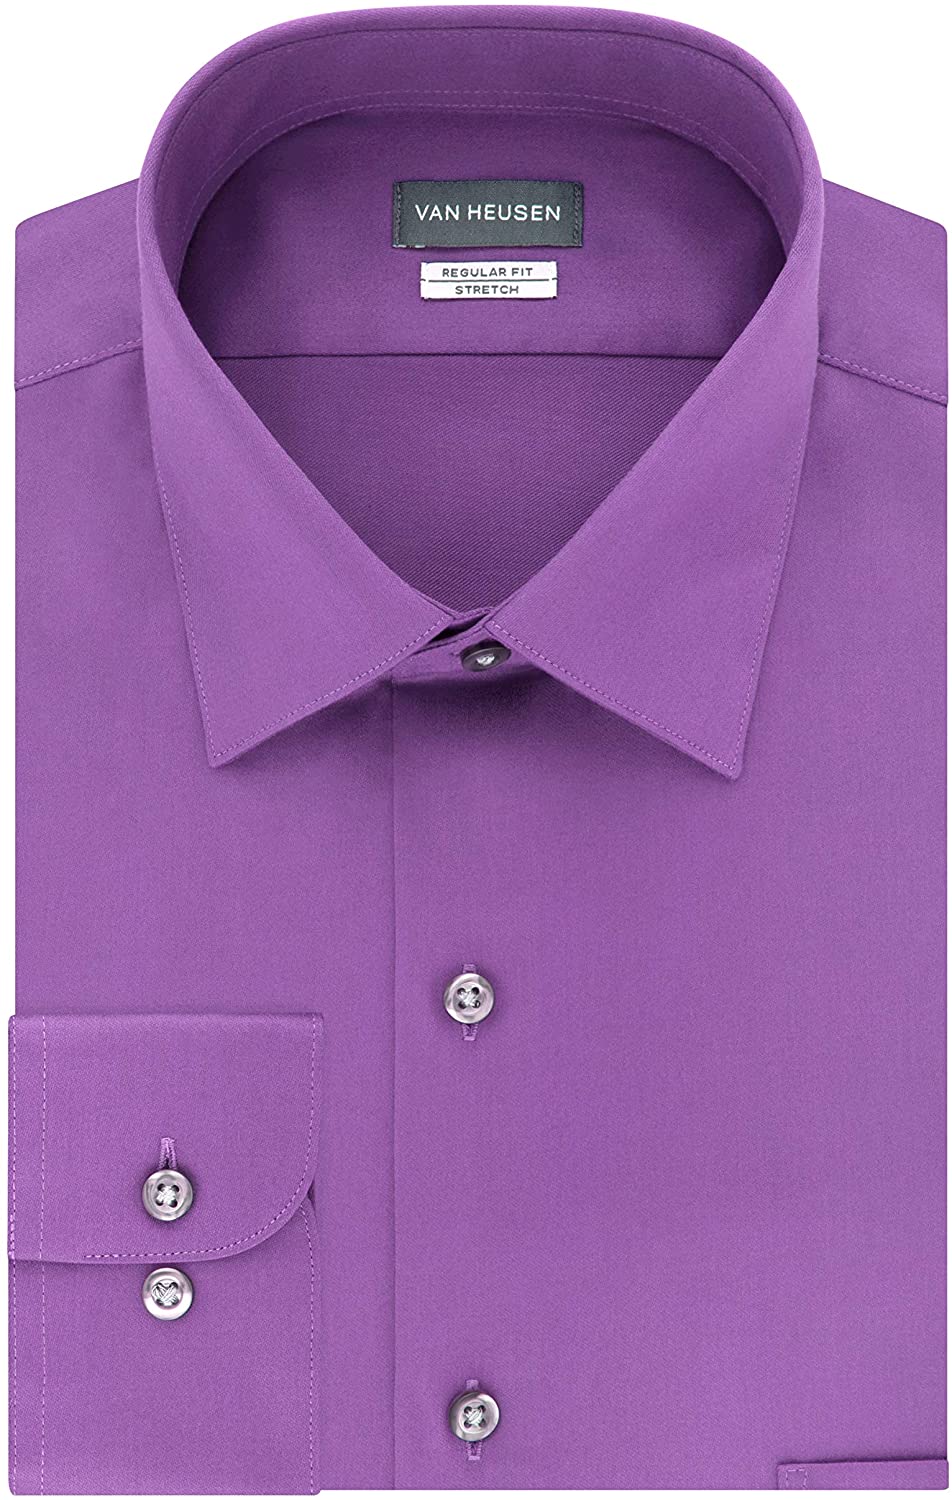 Mens Van Heusen No Iron Lux Sateen Dress Shirt Regular Fit Multiple Colors Sizes 